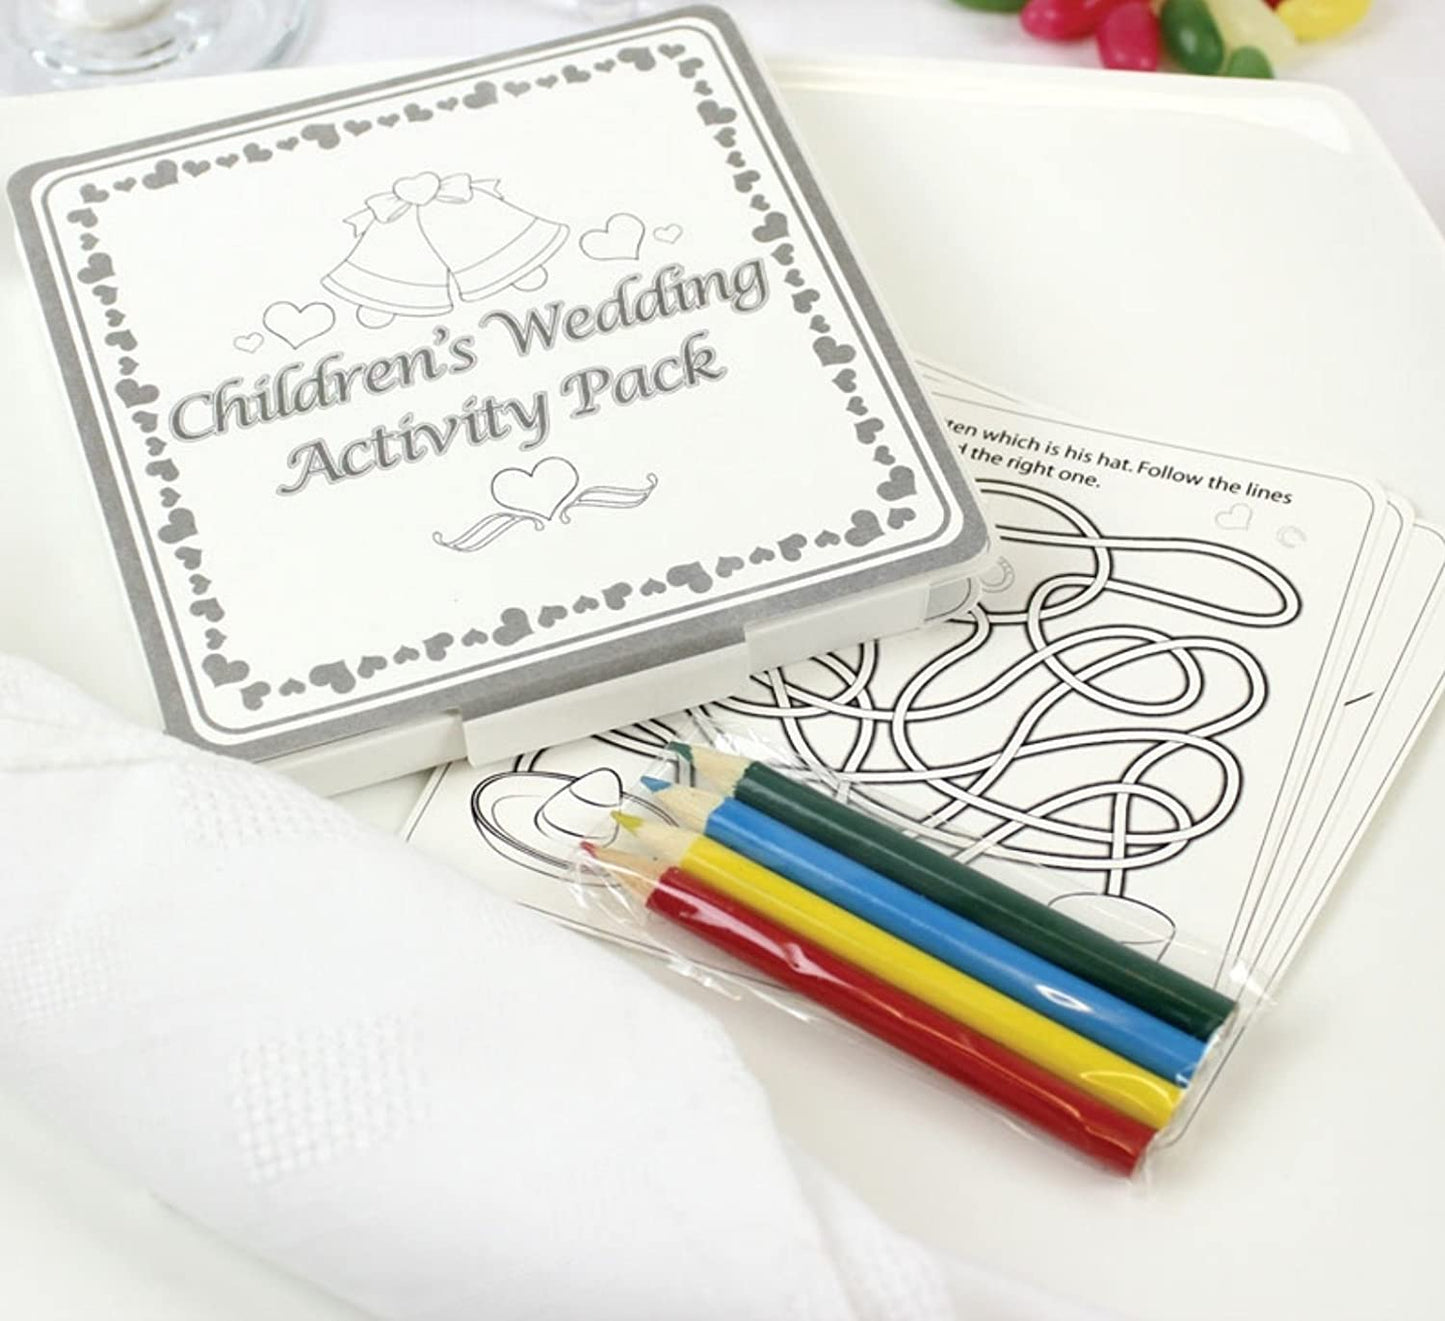 36 Childrens Wedding Activity Pack